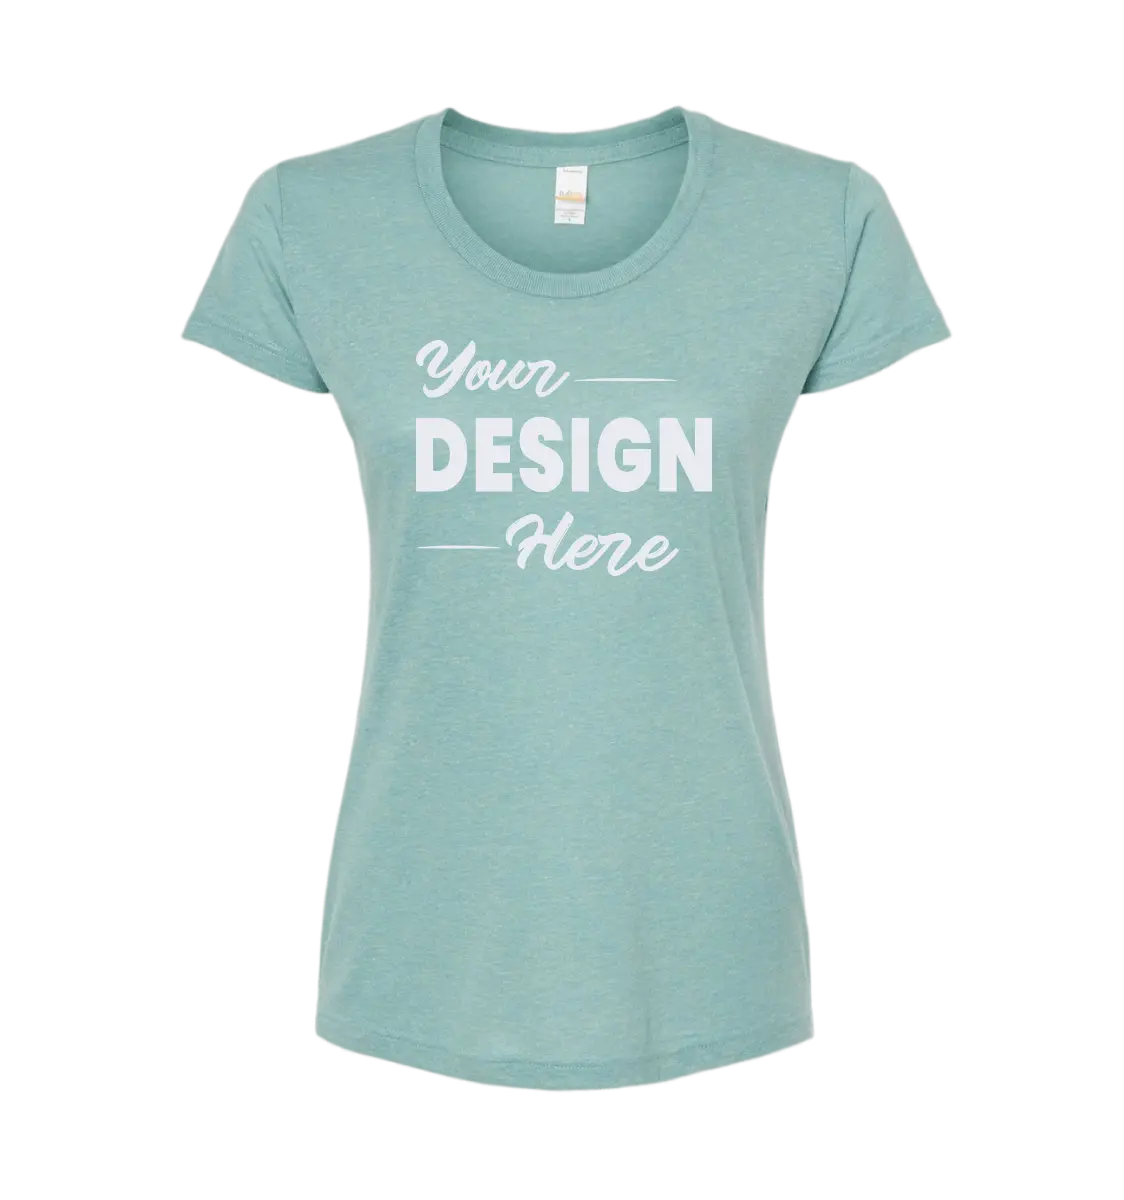 Turquoise color women's t-shirt